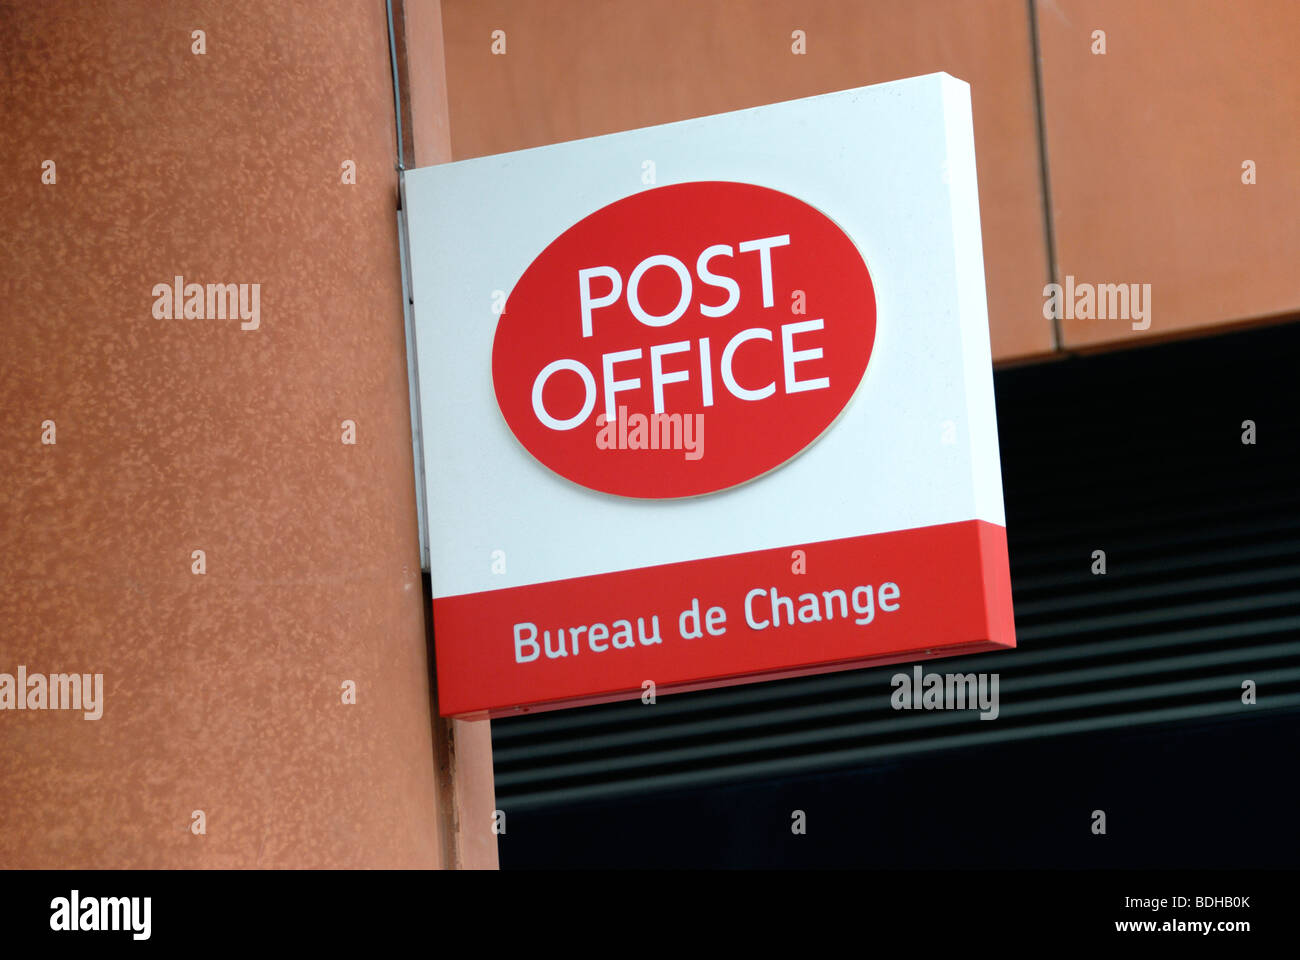 Post Office Bureau de Change sign, London, England Stock Photo